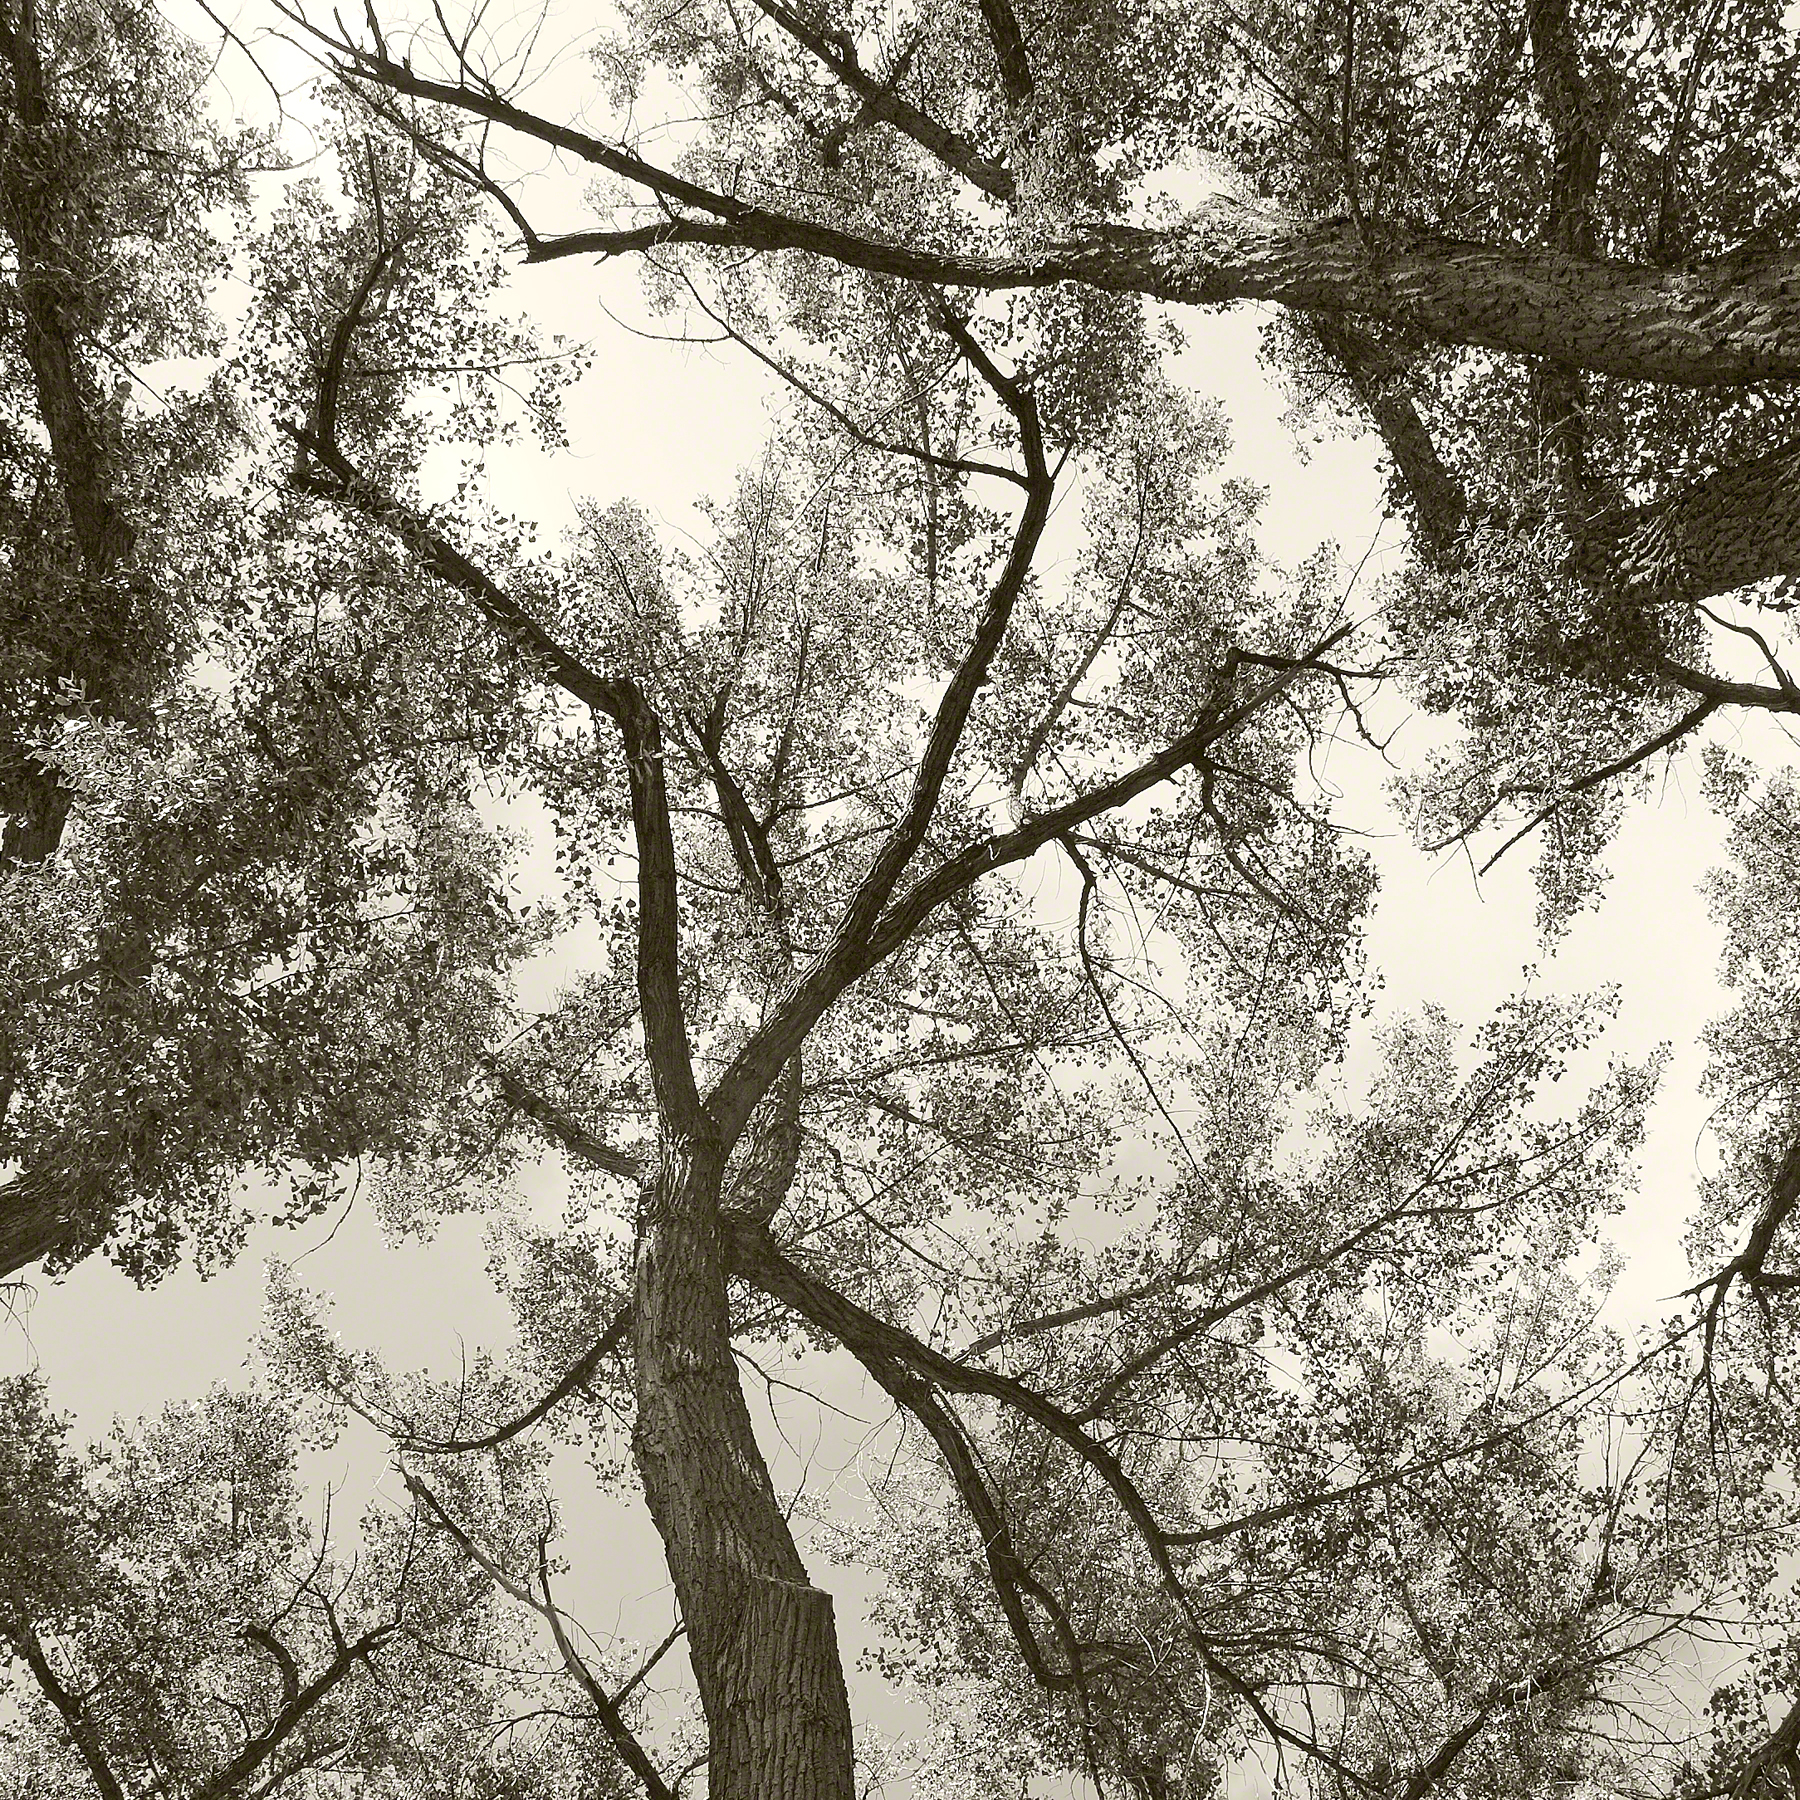 TREES OF UCROSS AND SHADY LANE (2009)